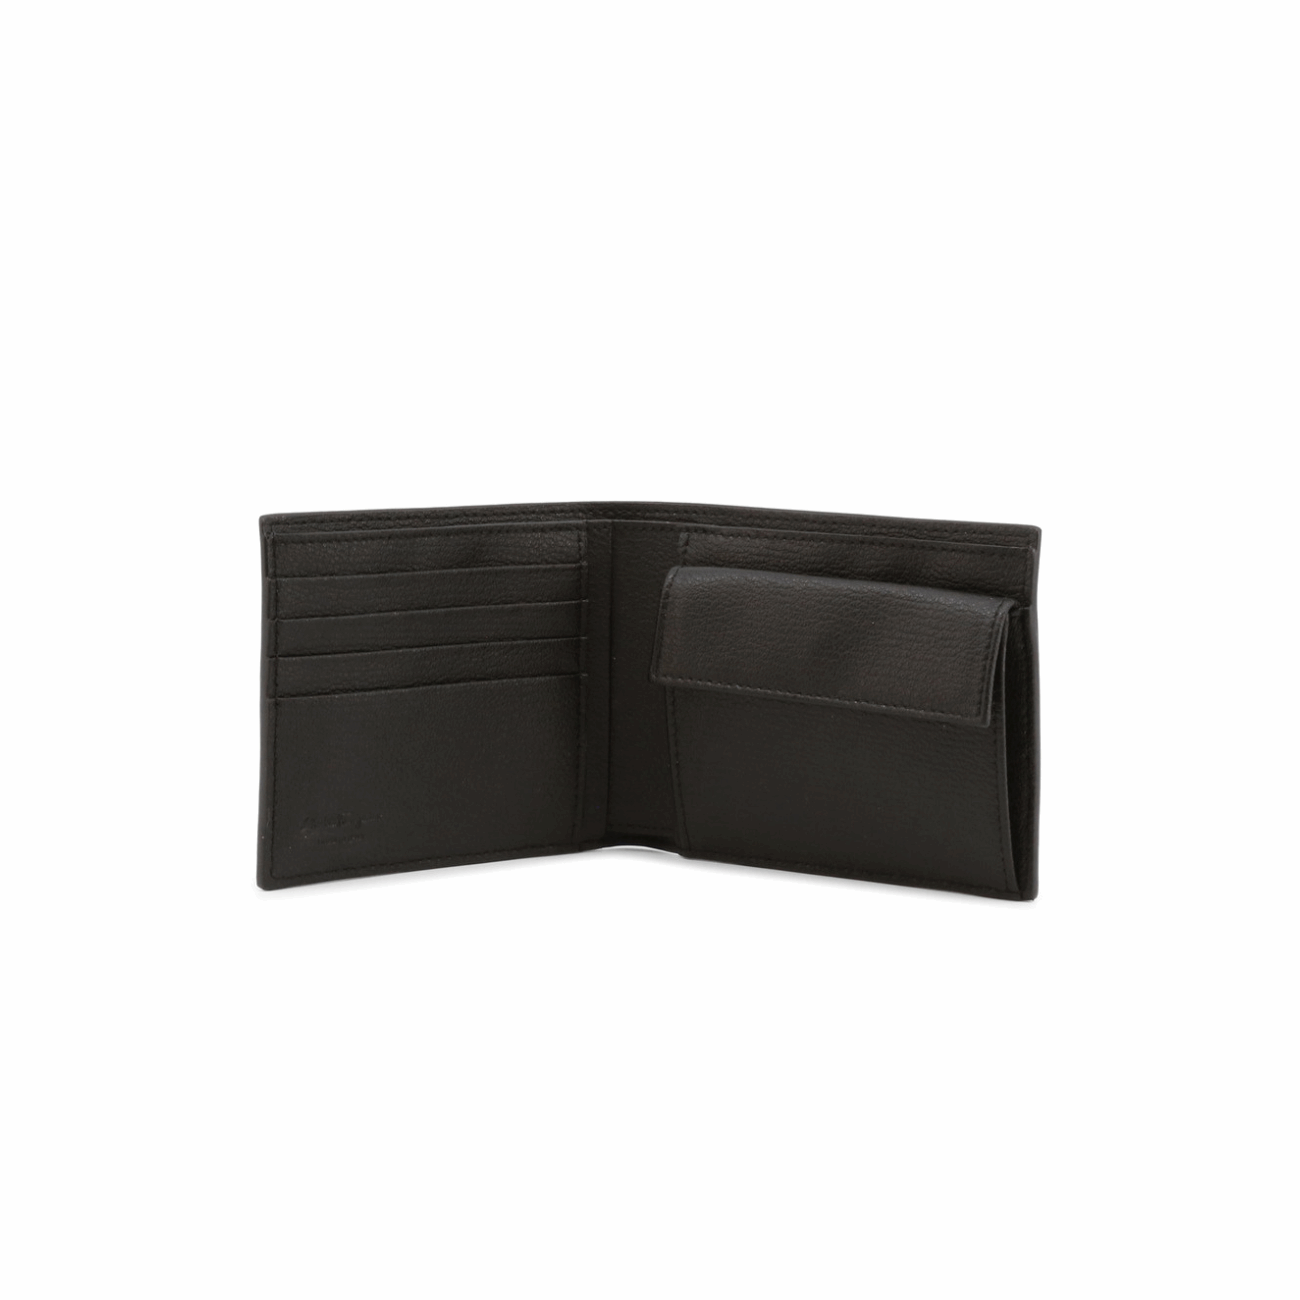 Salvatore Ferragamo 660988 752991 Gancini Leather Men's Wallet, Black